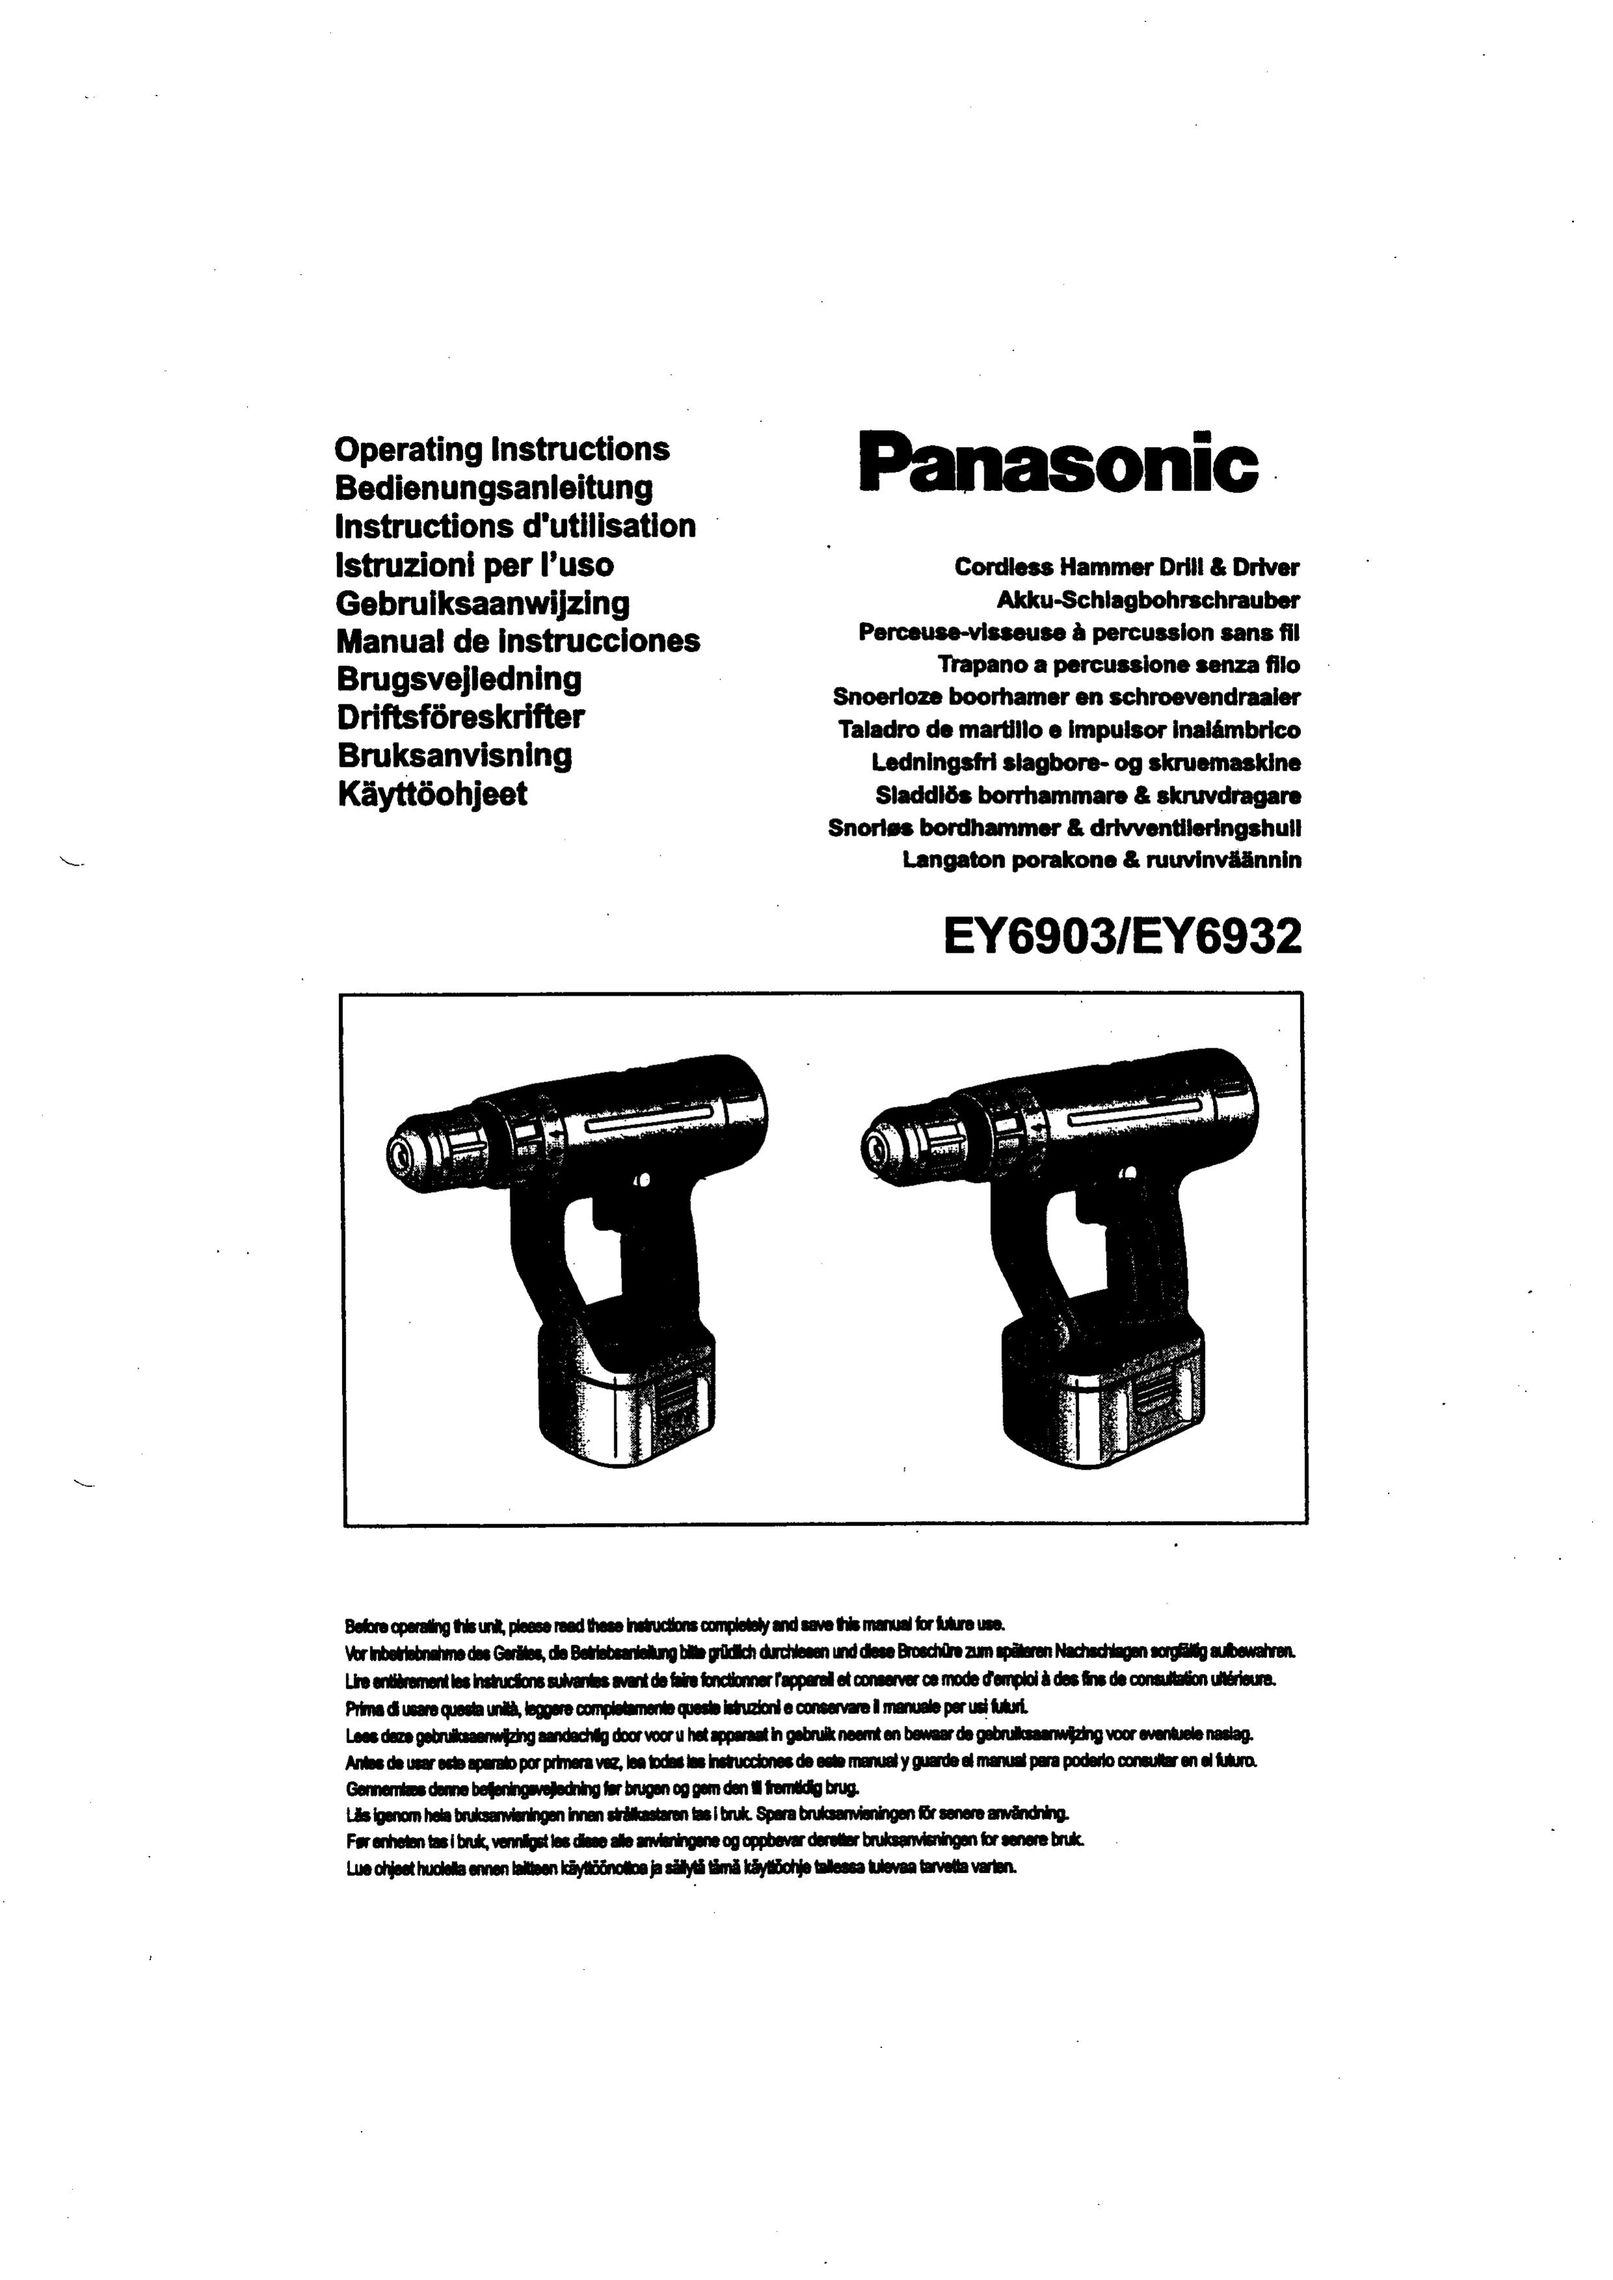 Panasonic EY6903 Cordless Drill User Manual